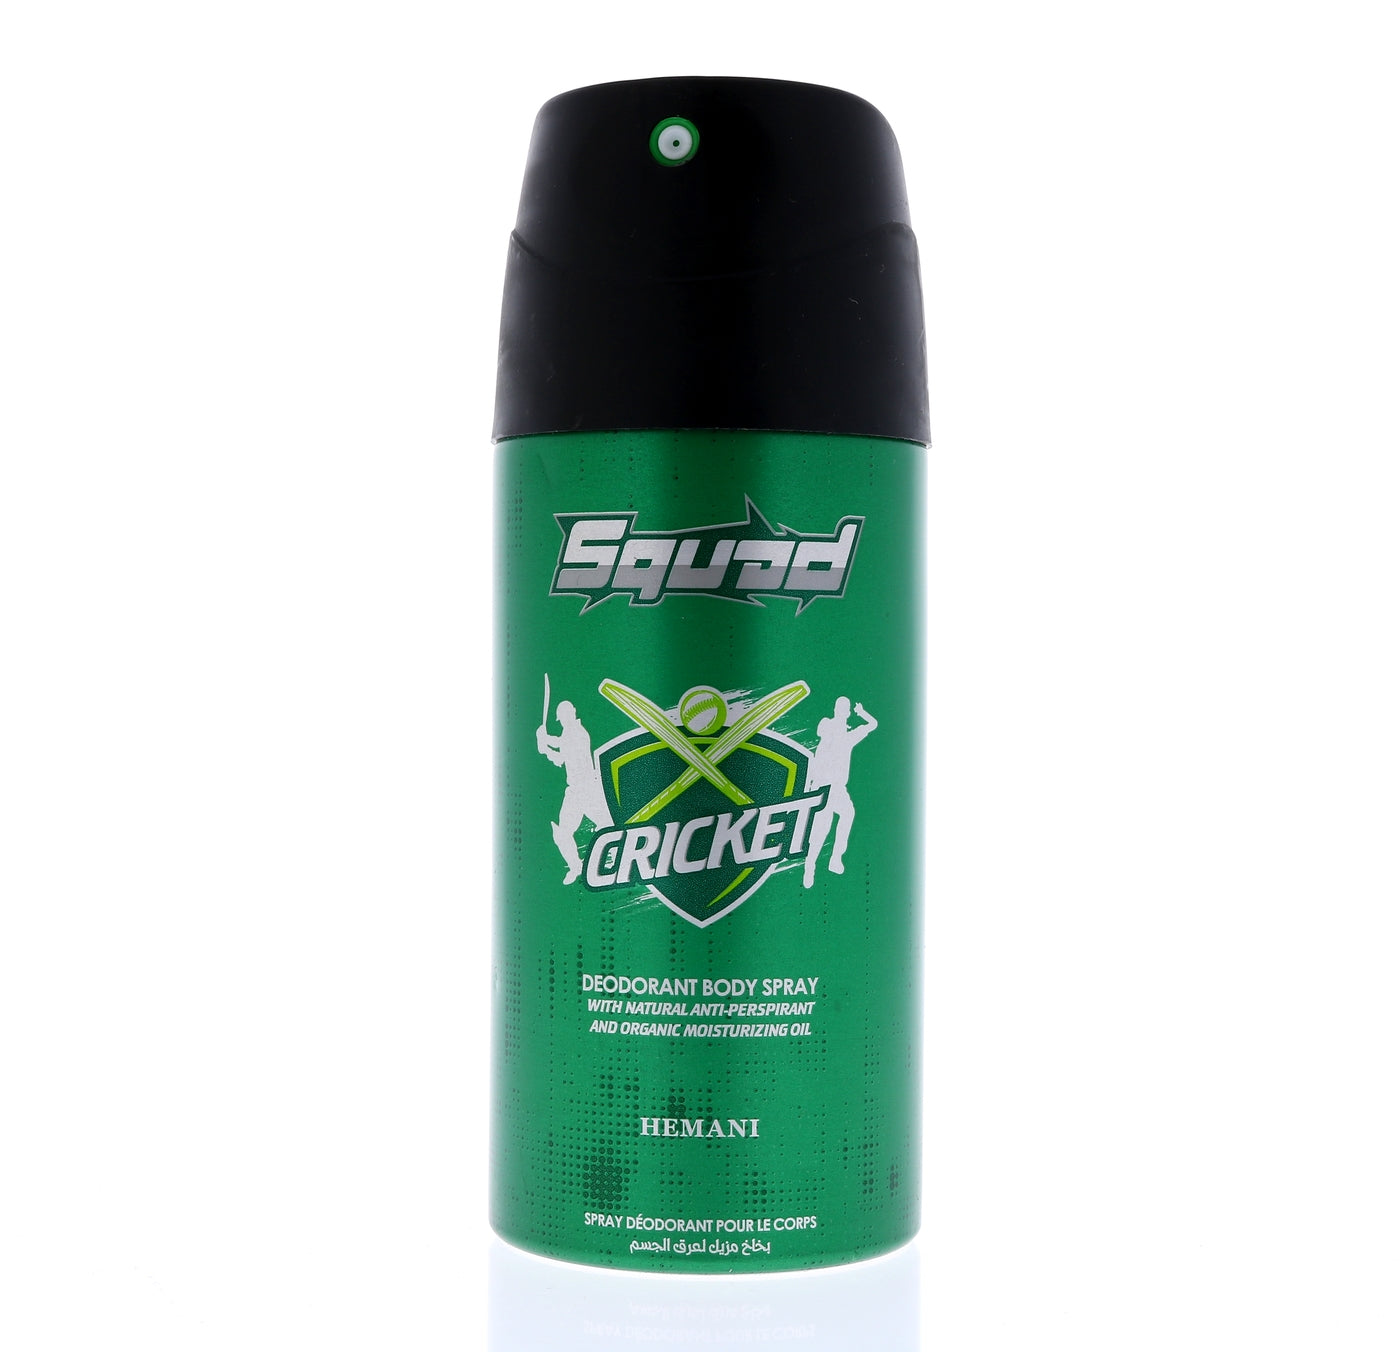 hemani-squad-deodorant-spray-cricket-150ml-1